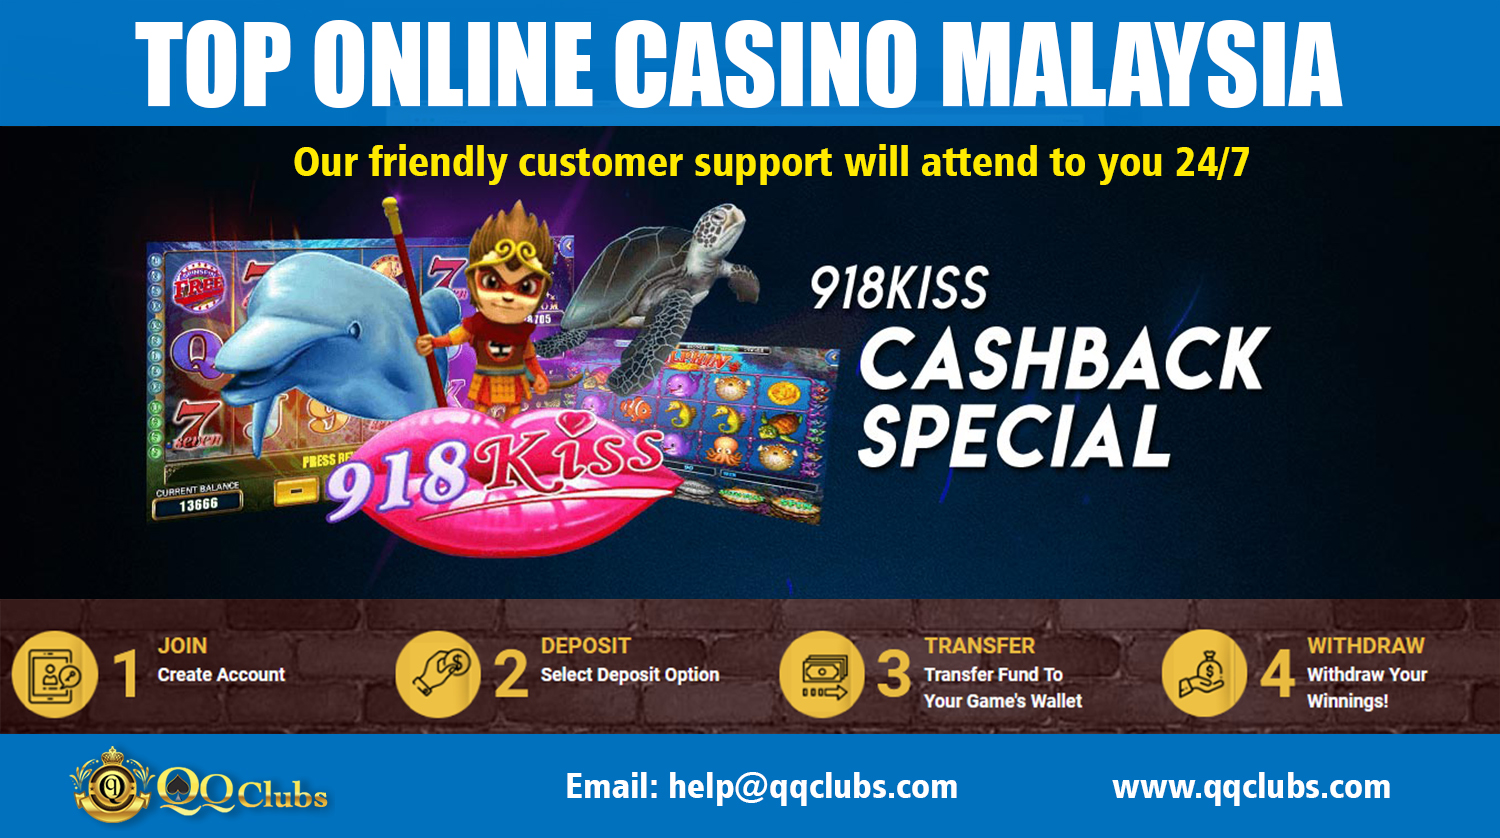 Trusted online casino malaysia 2019 vbulletin казино онлайн william hill viewtopic php